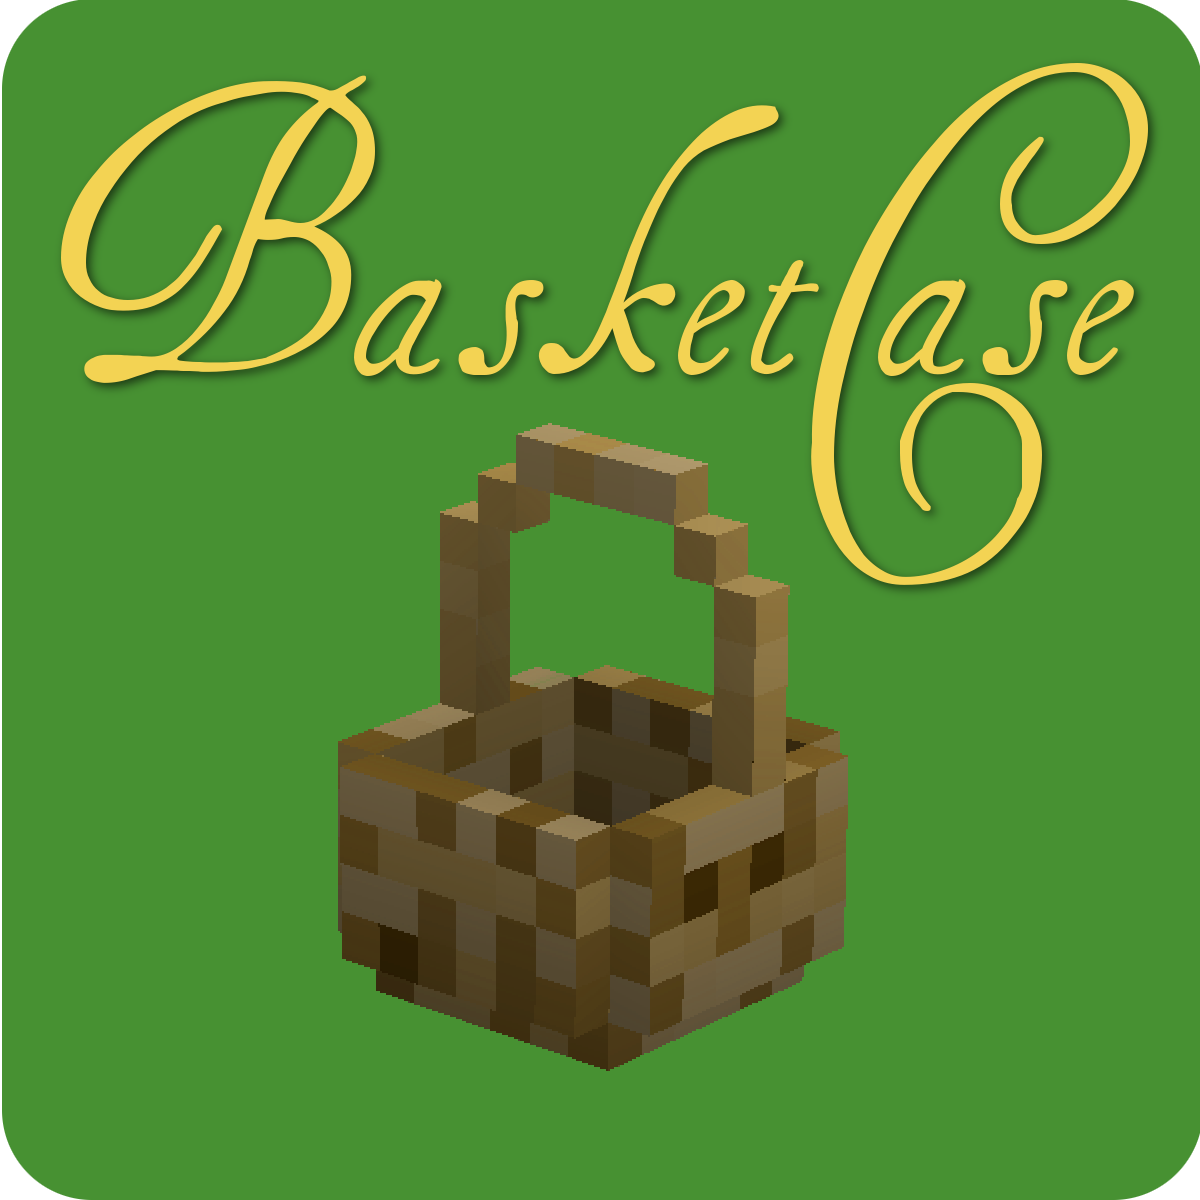 Basket Case logo